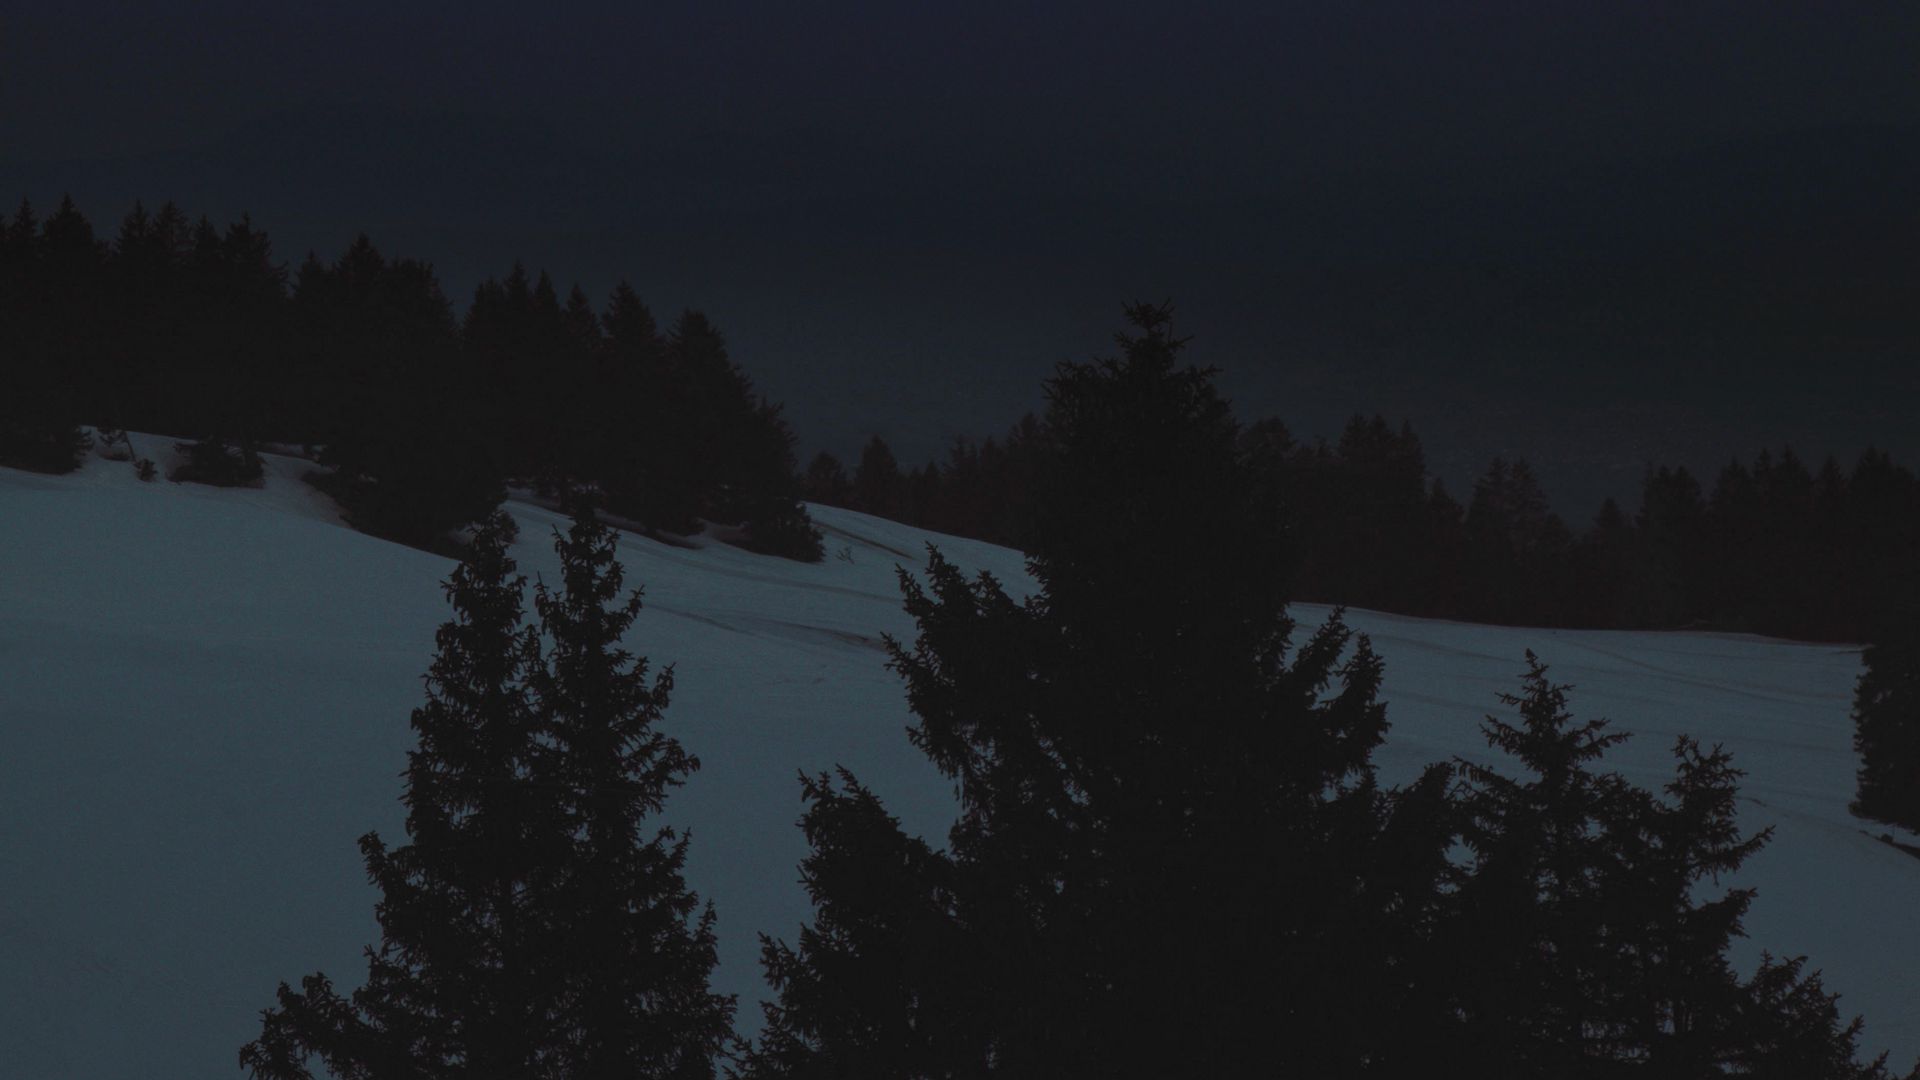 Download wallpaper 1920x1080 night, landscape, winter, moon, trees, dark full hd, hdtv, fhd, 1080p HD background